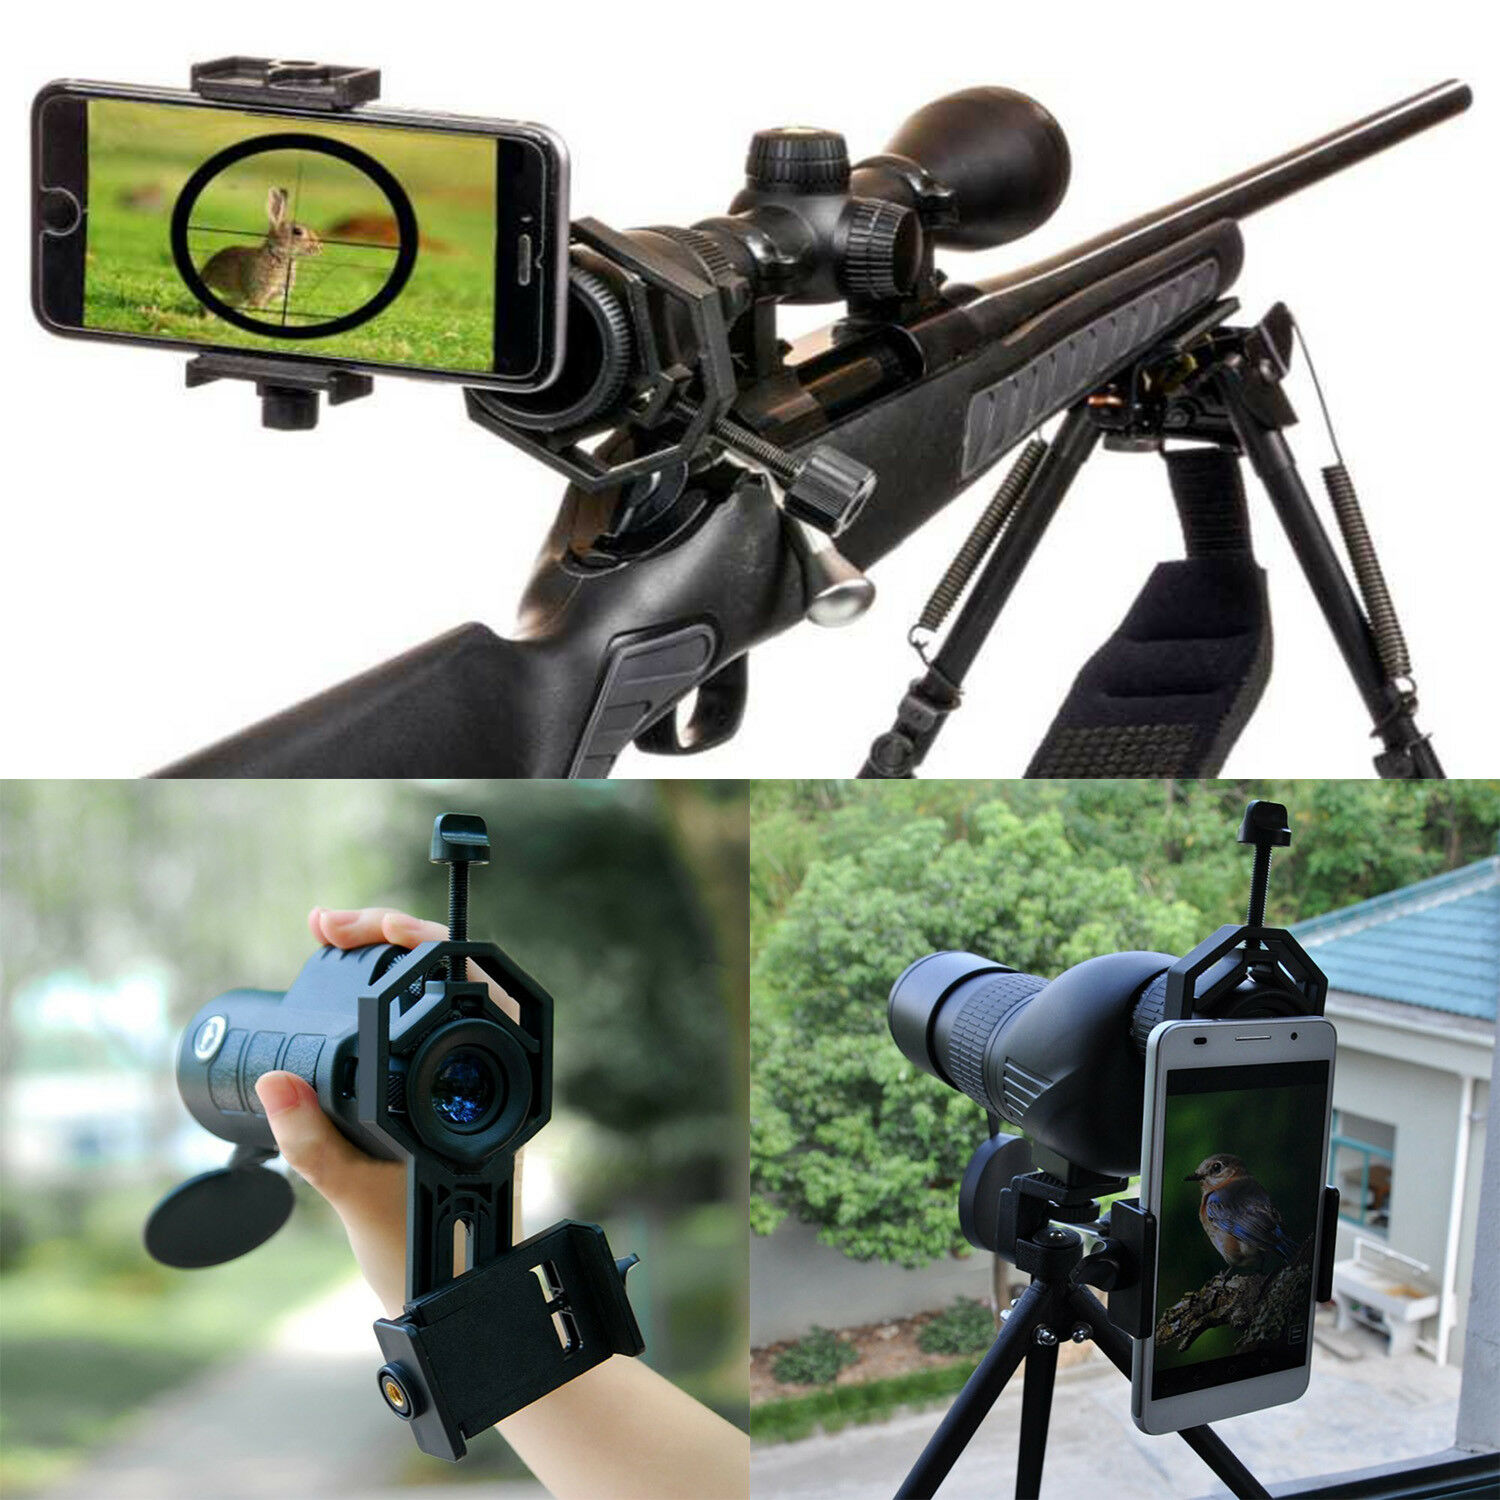 Universal Mobile Phone Holder Spotting Scope Cellphone Adapter Mount Rifle Scope